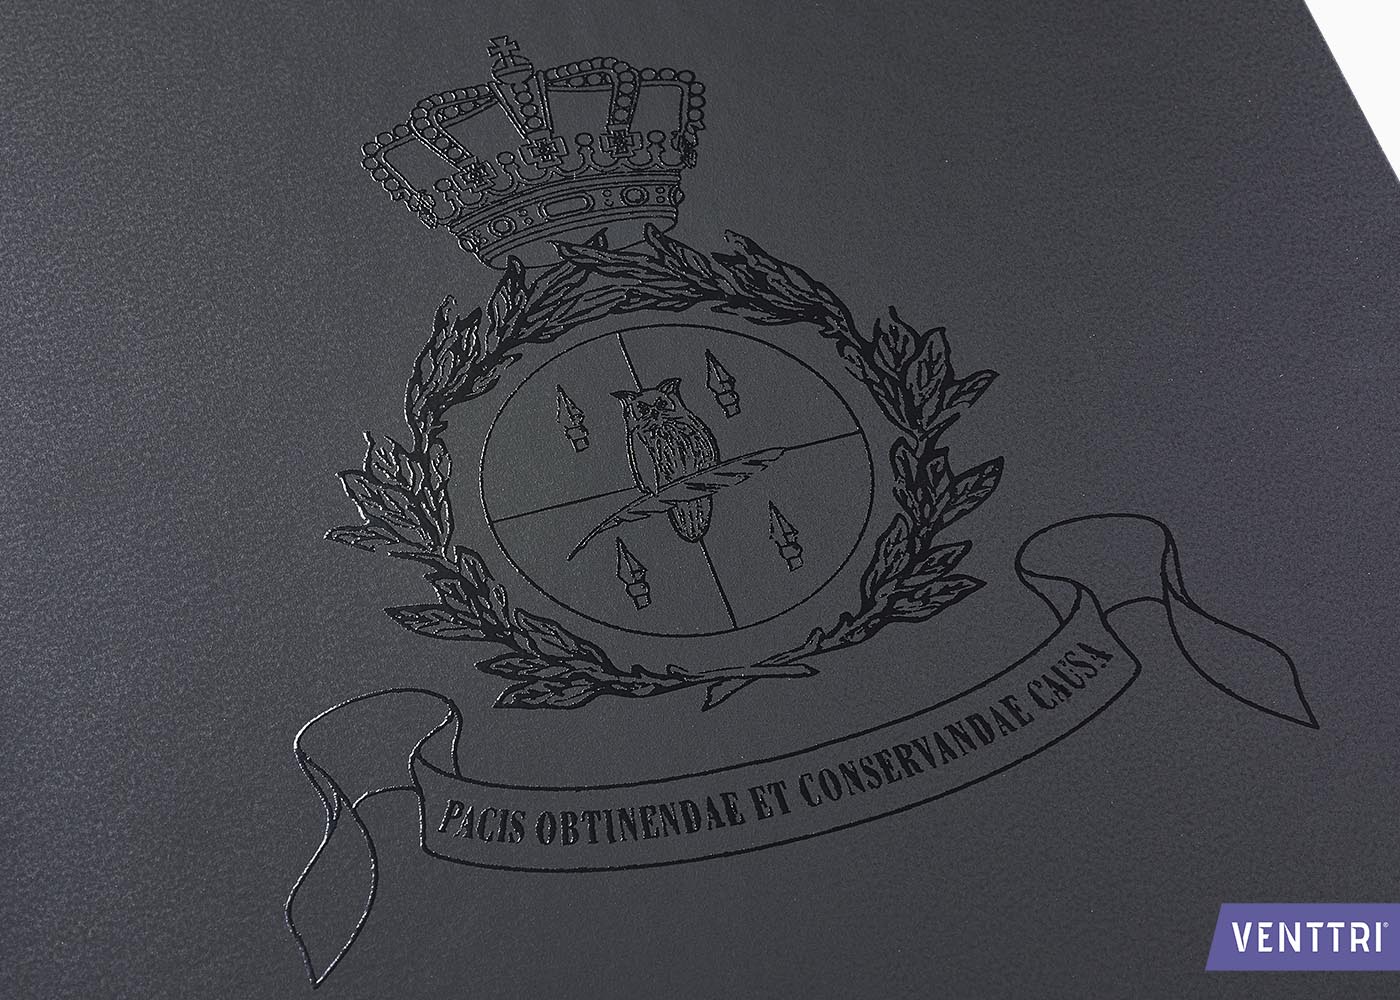 diplomamap op maat met spot UV opliggend logo